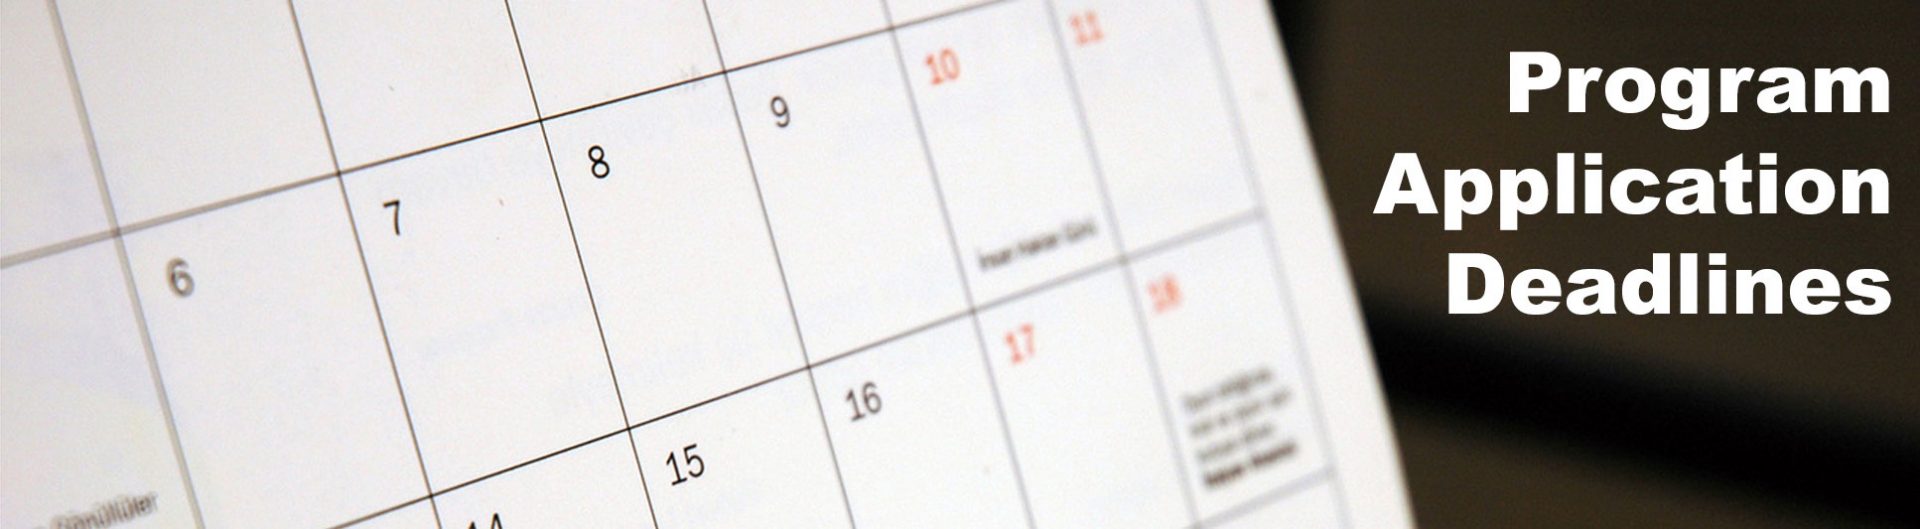 calendar showcasing program application deadlines